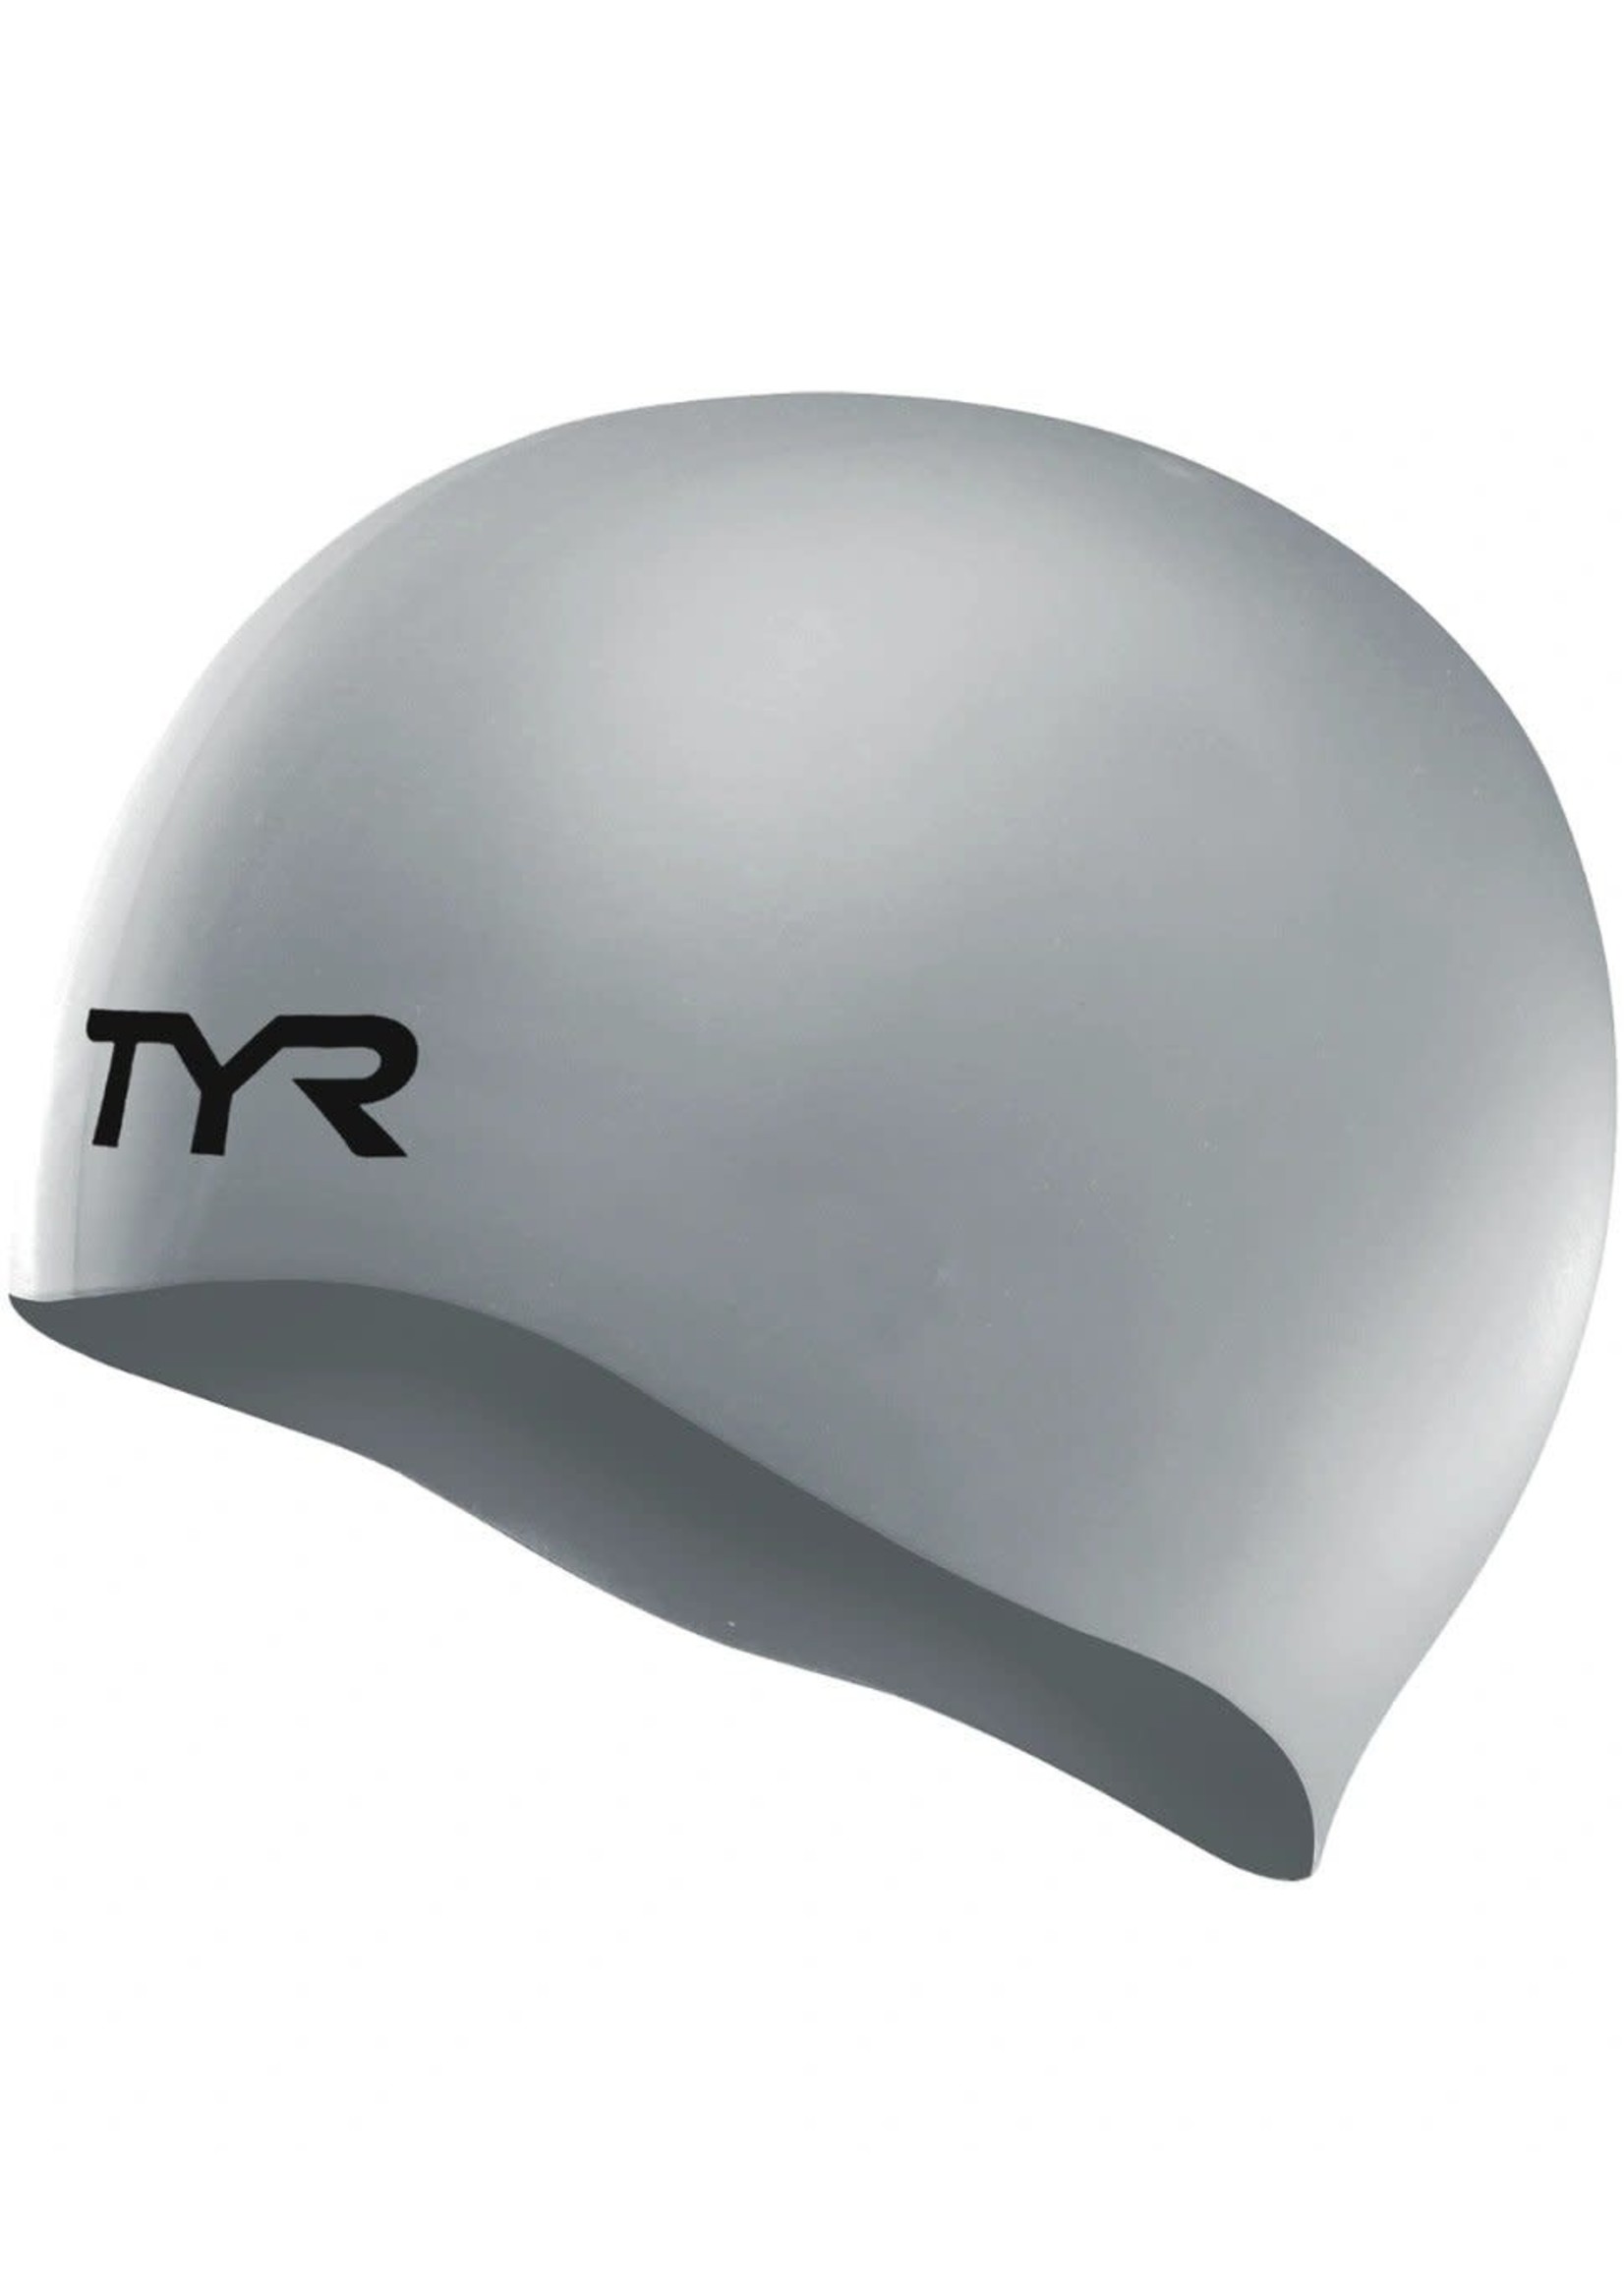 TYR Silicone Swim Cap- Silver